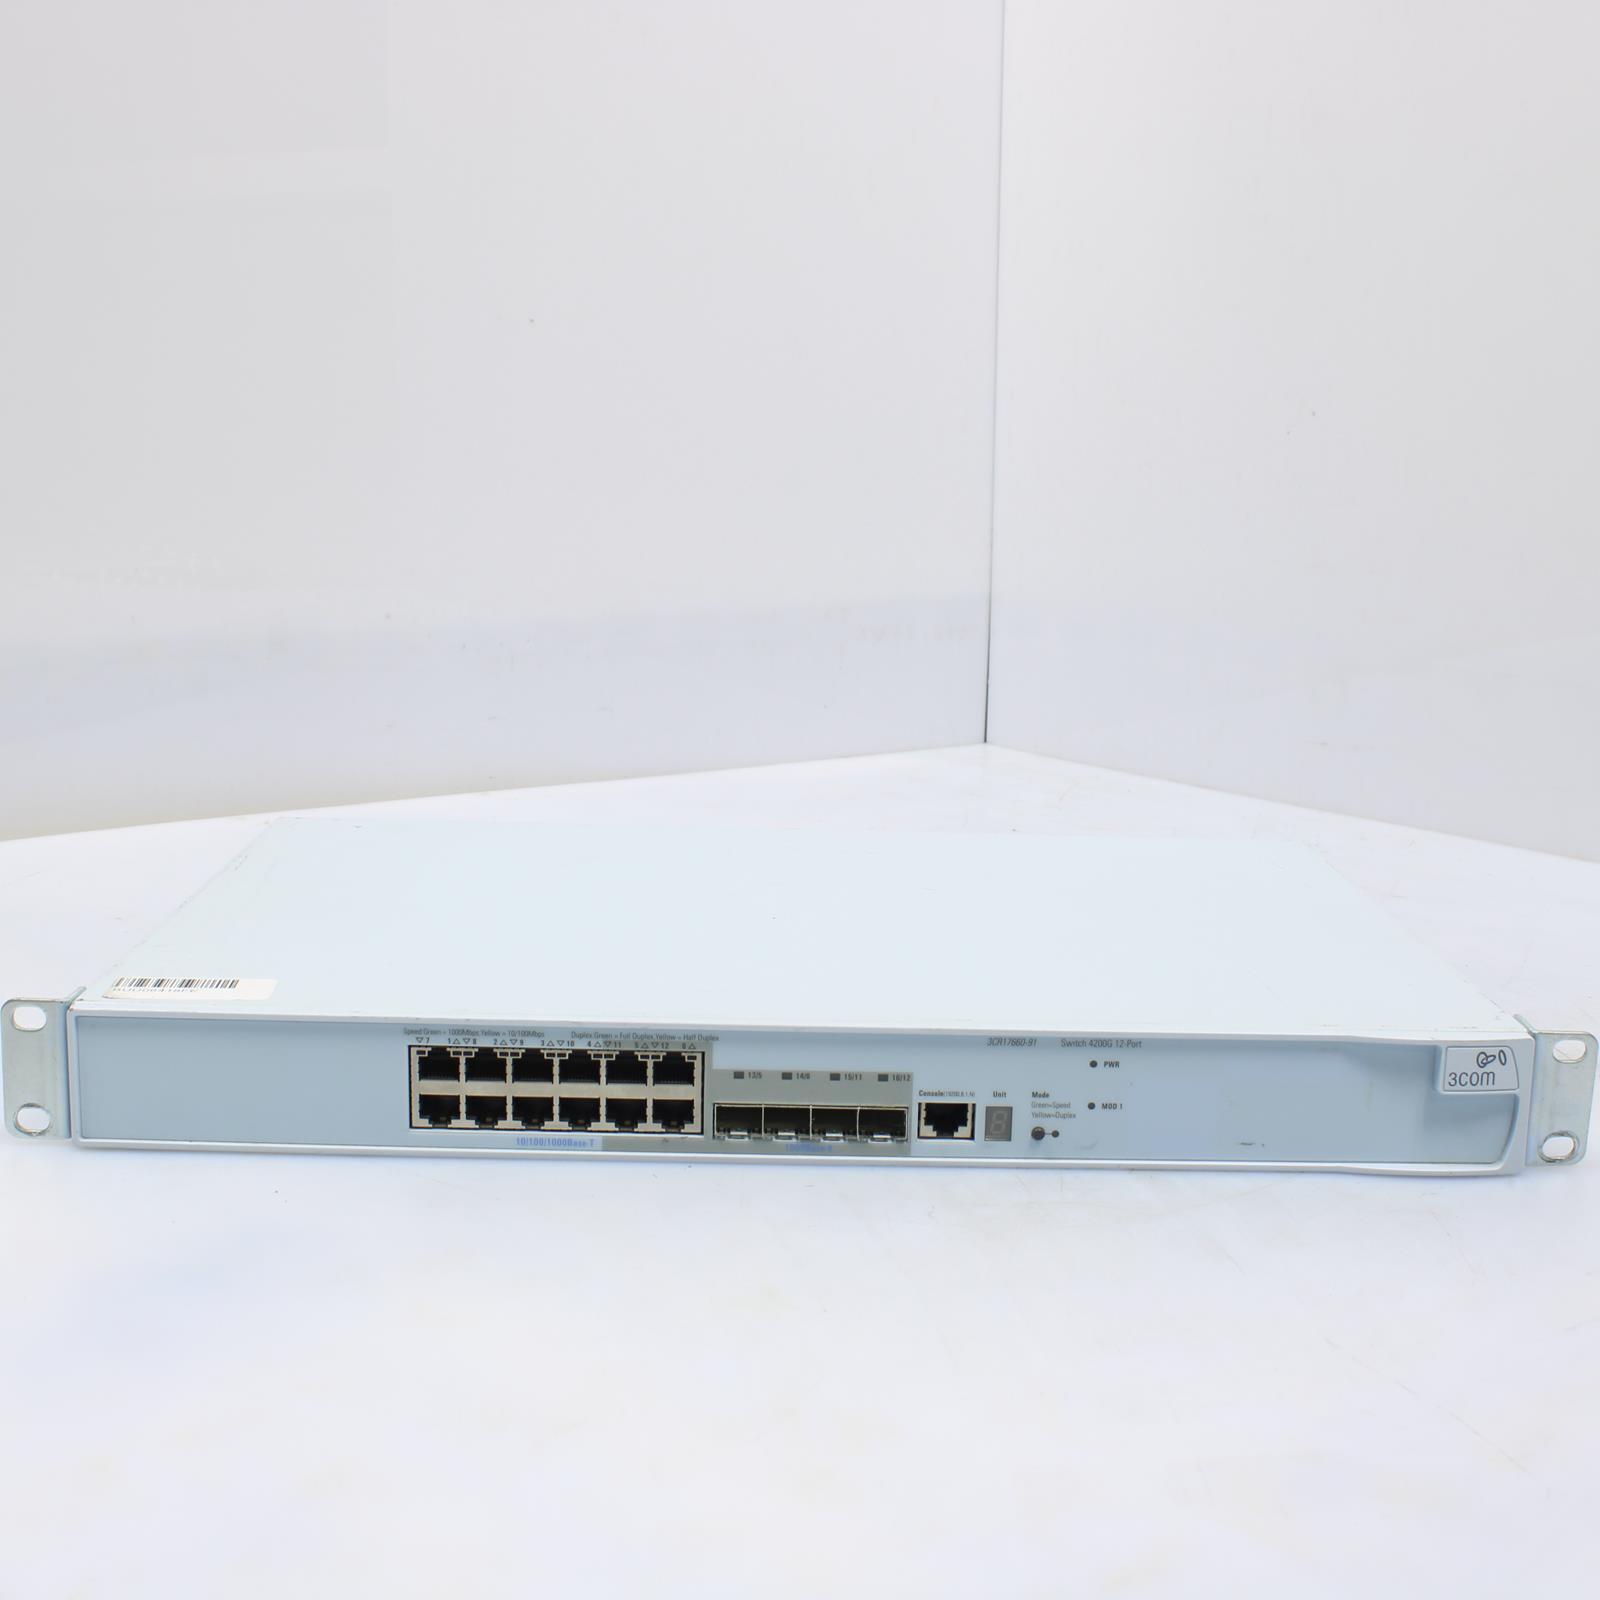 3COM 4200G 3CR17660-91 12-Port Network Switch